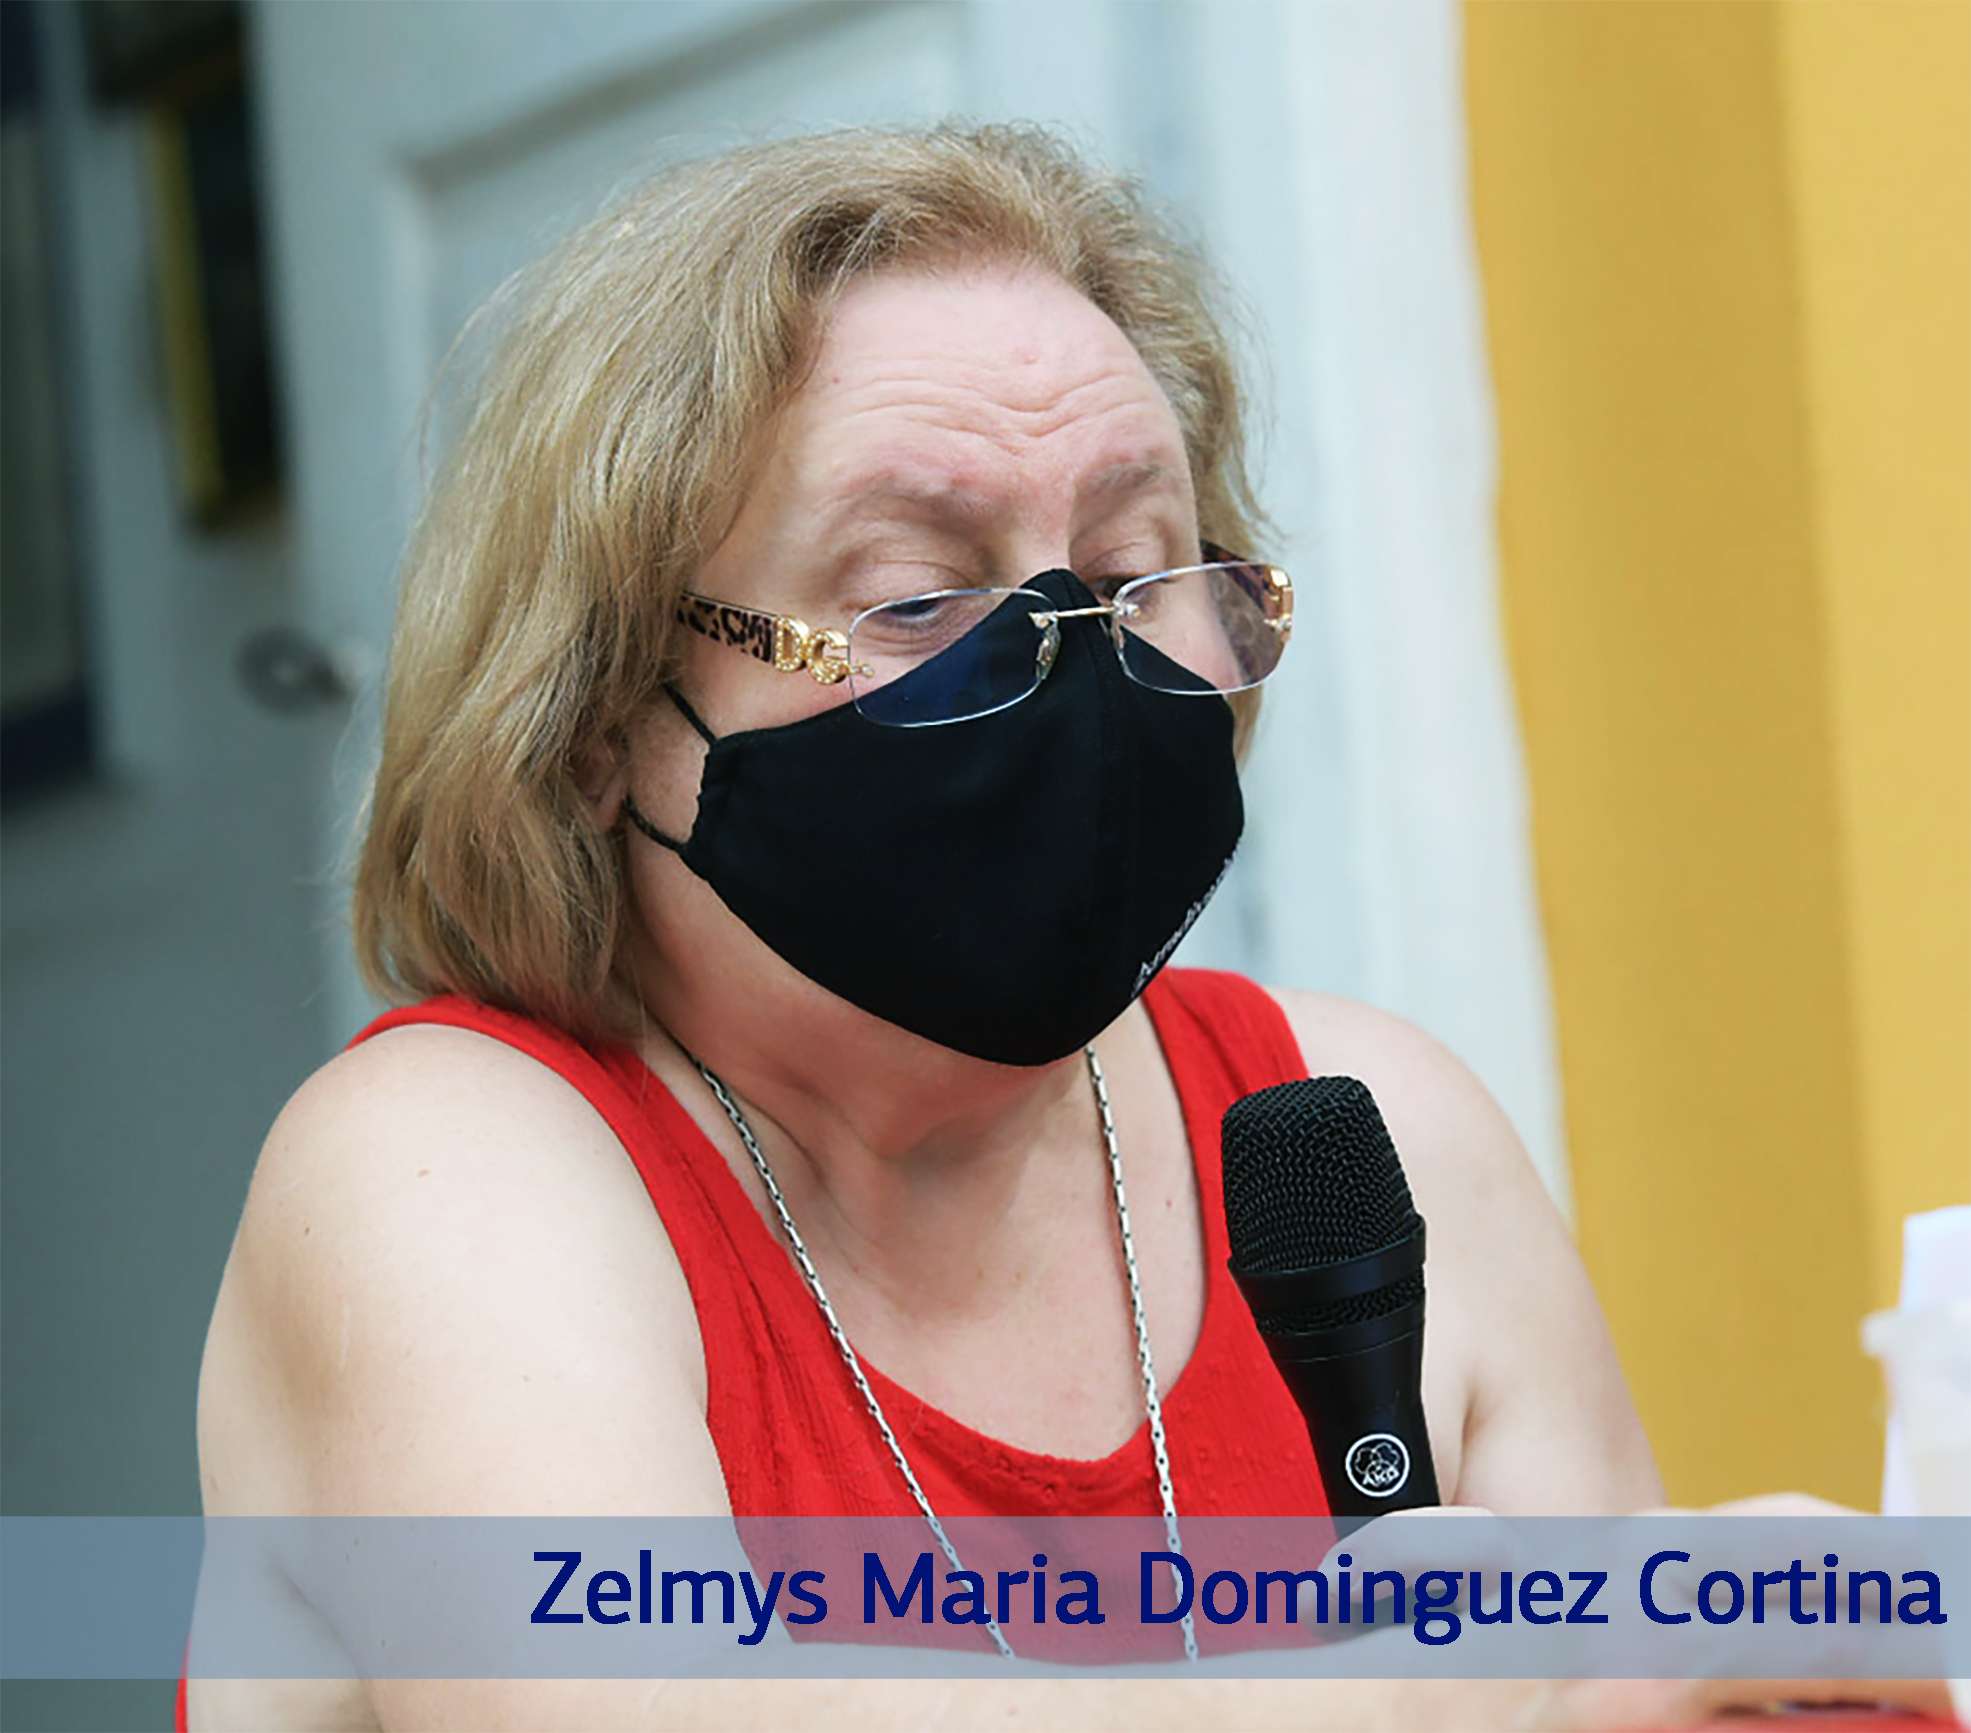 Zelmys Maria Dominguez Cortina